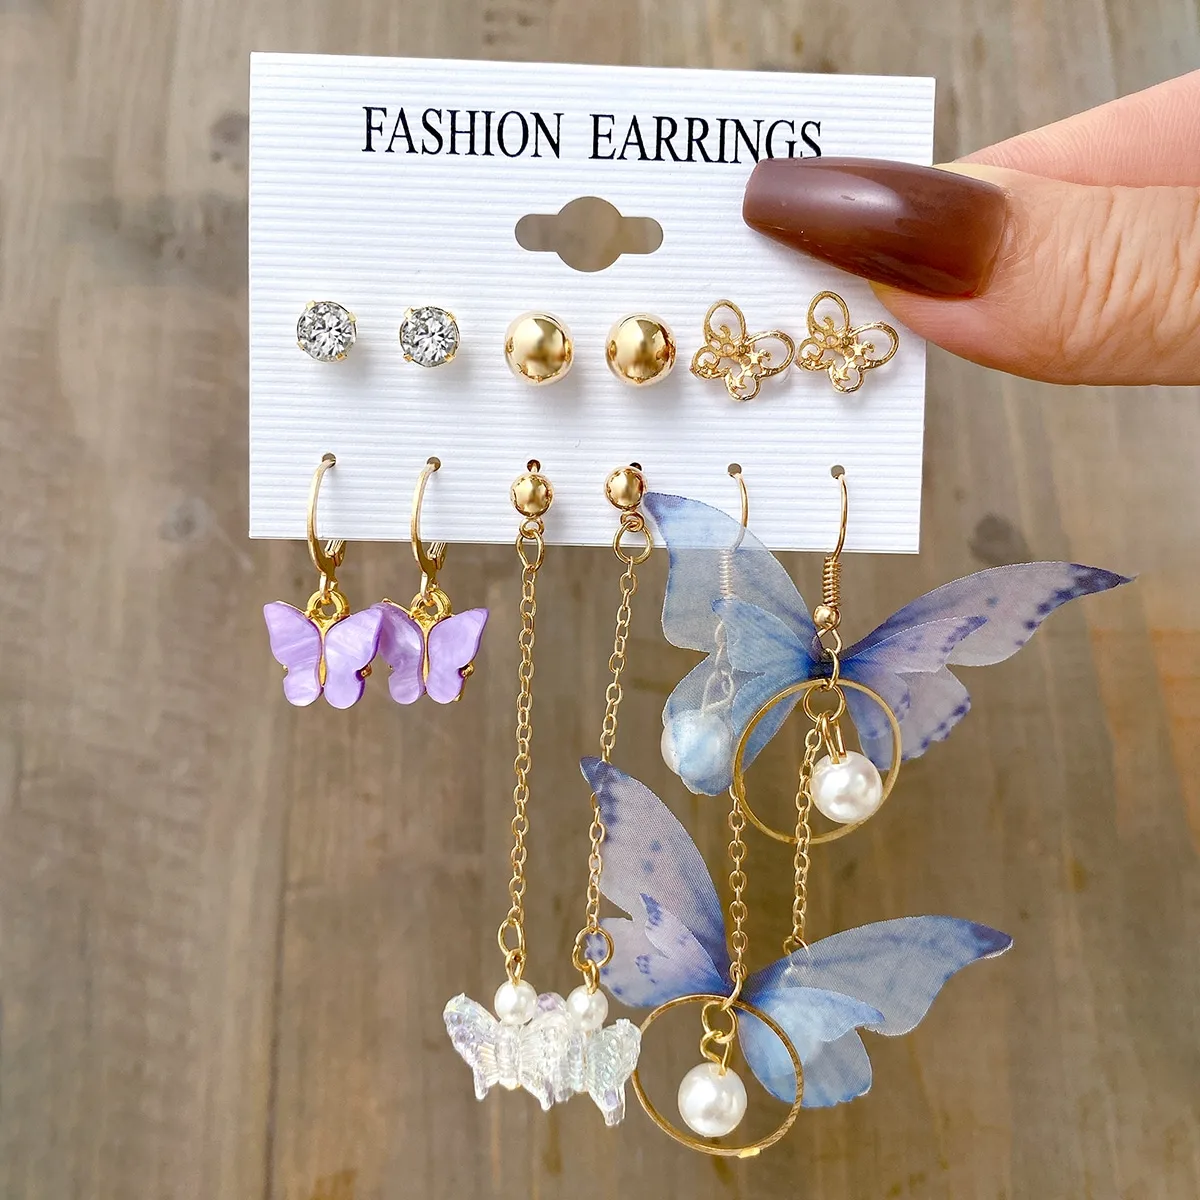  LKingel 12Pairs Gold Statement Earrings for Women Gold Dangle Earring  Set Love Pearl Snake Butterfly Mushroom Lock Earring Set Punk Fashion  Earrings Jewelry for Women Girls (12pairs): Clothing, Shoes & Jewelry